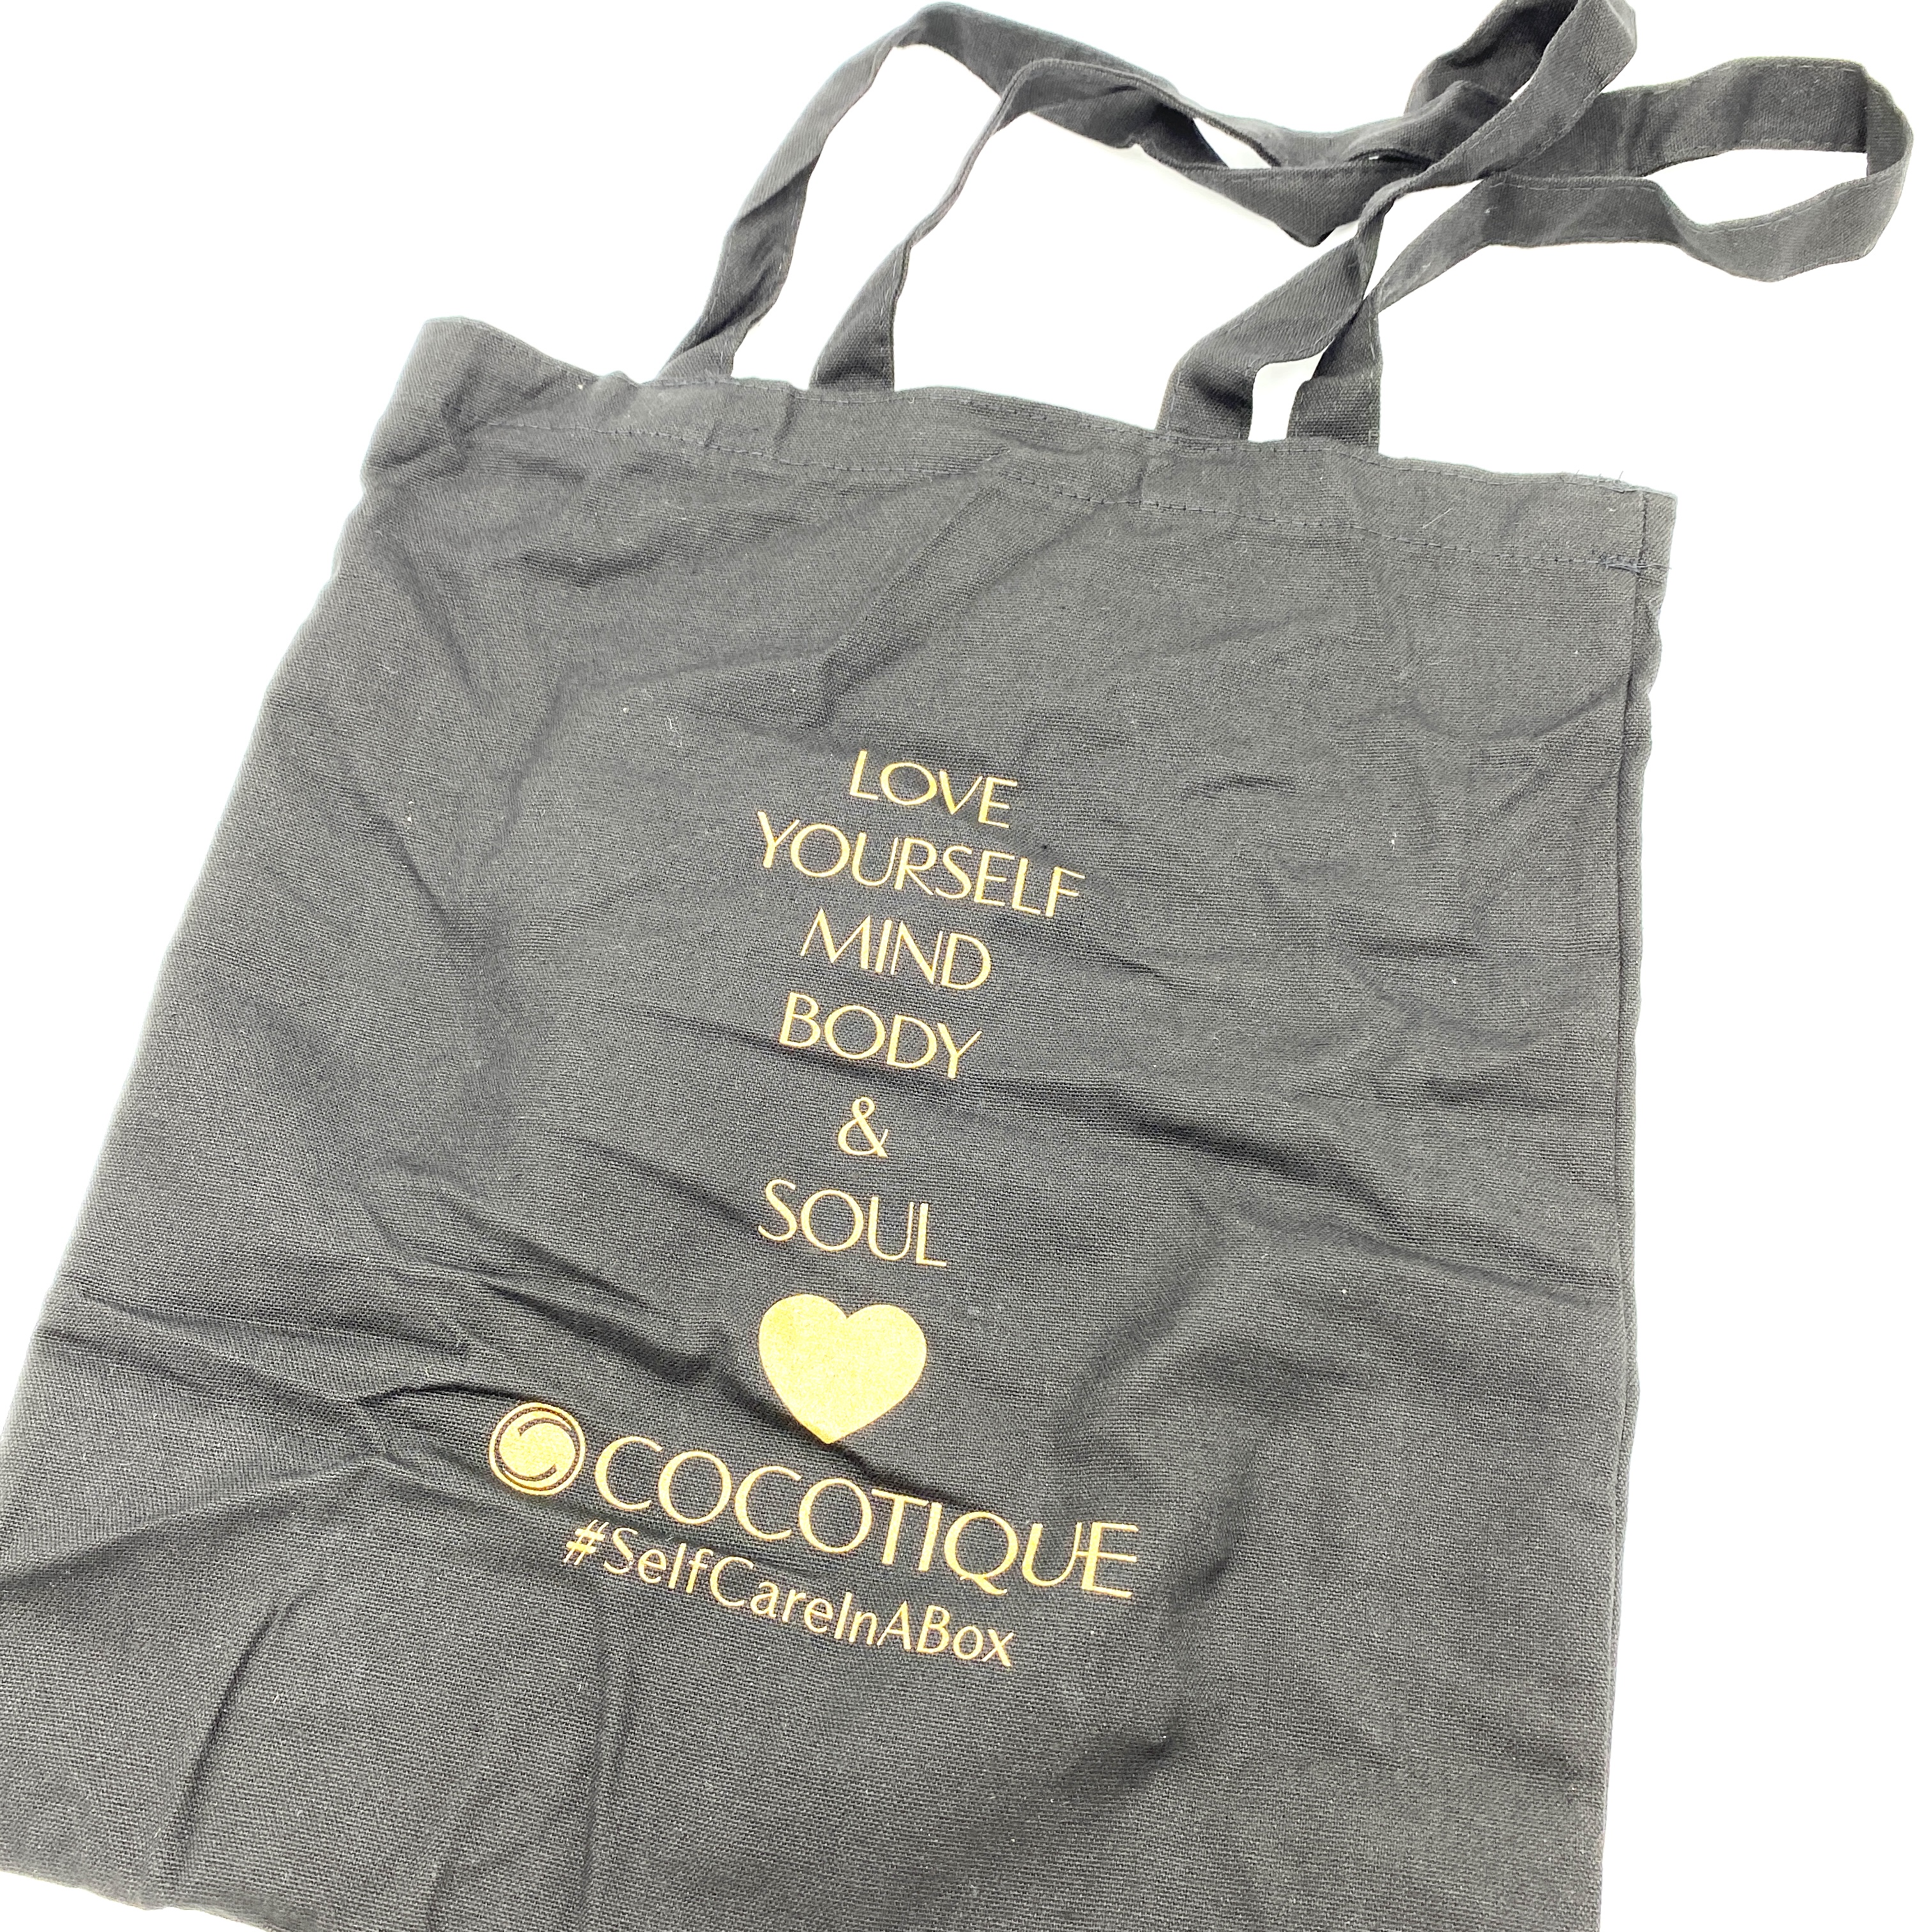 Bag for Cocotique October 2020